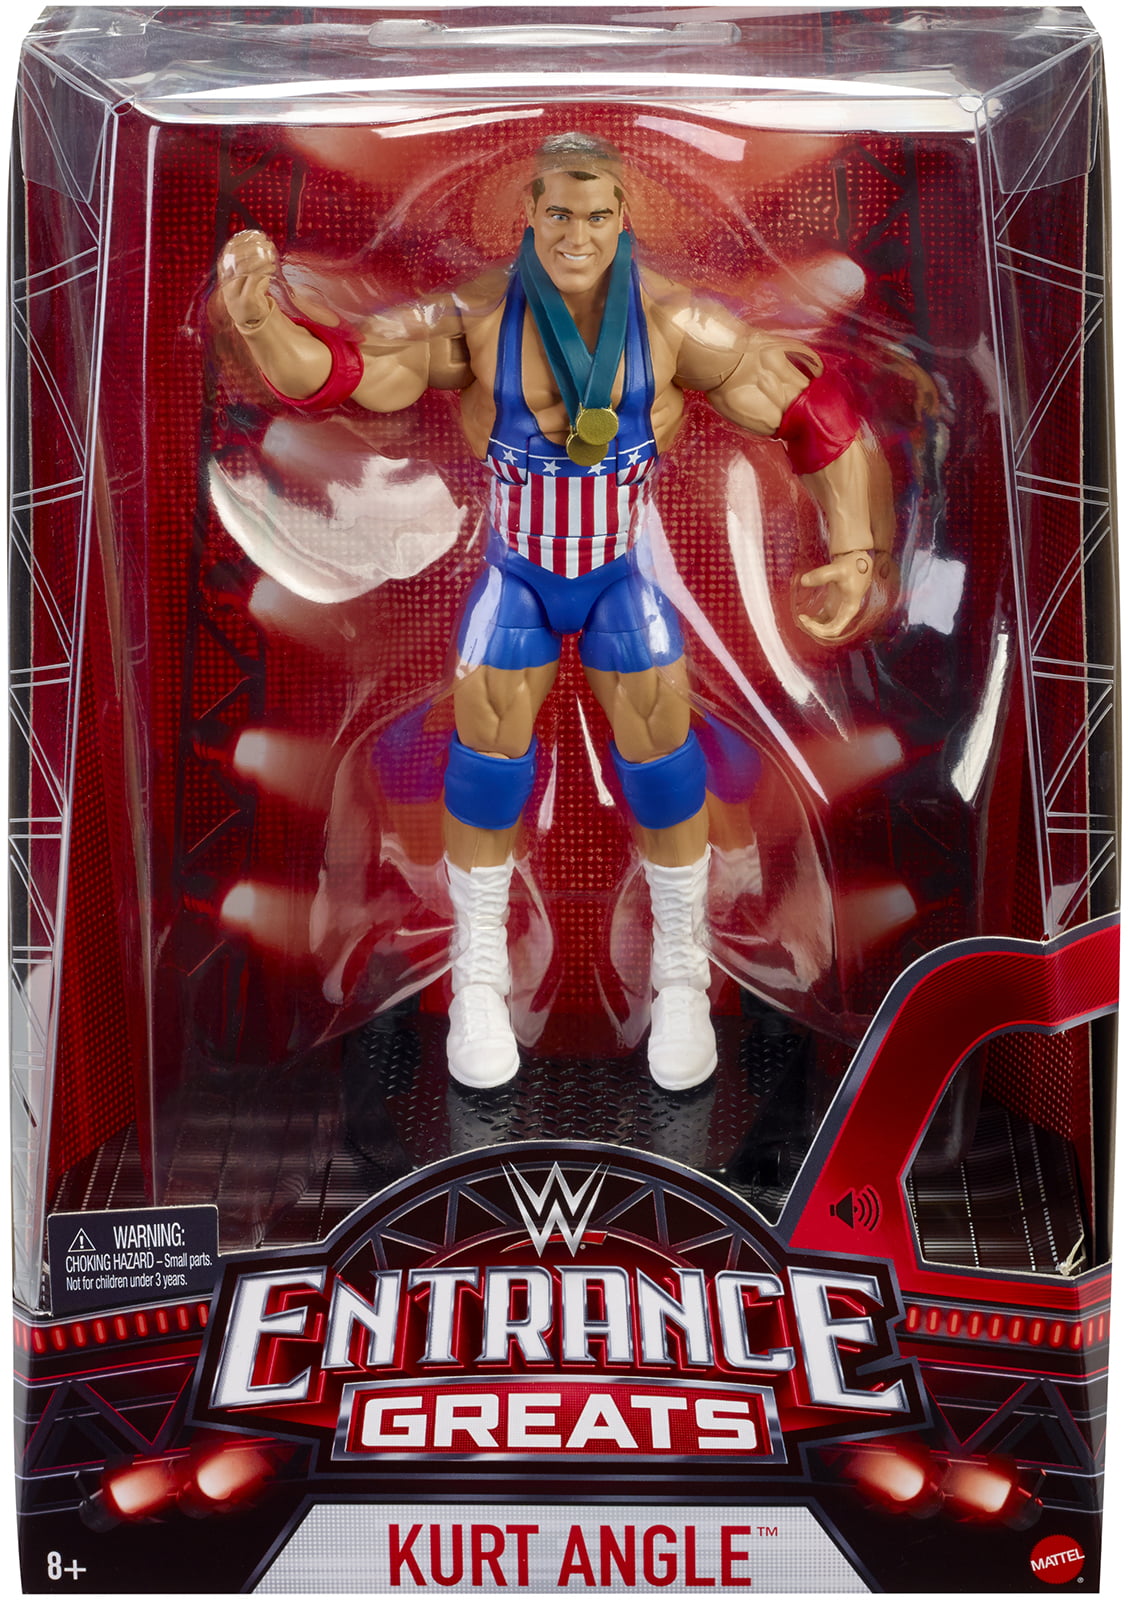 Buy Kurt Angle - WWE Entrance Greats Toy Wrestling Action Figure at Walmart...